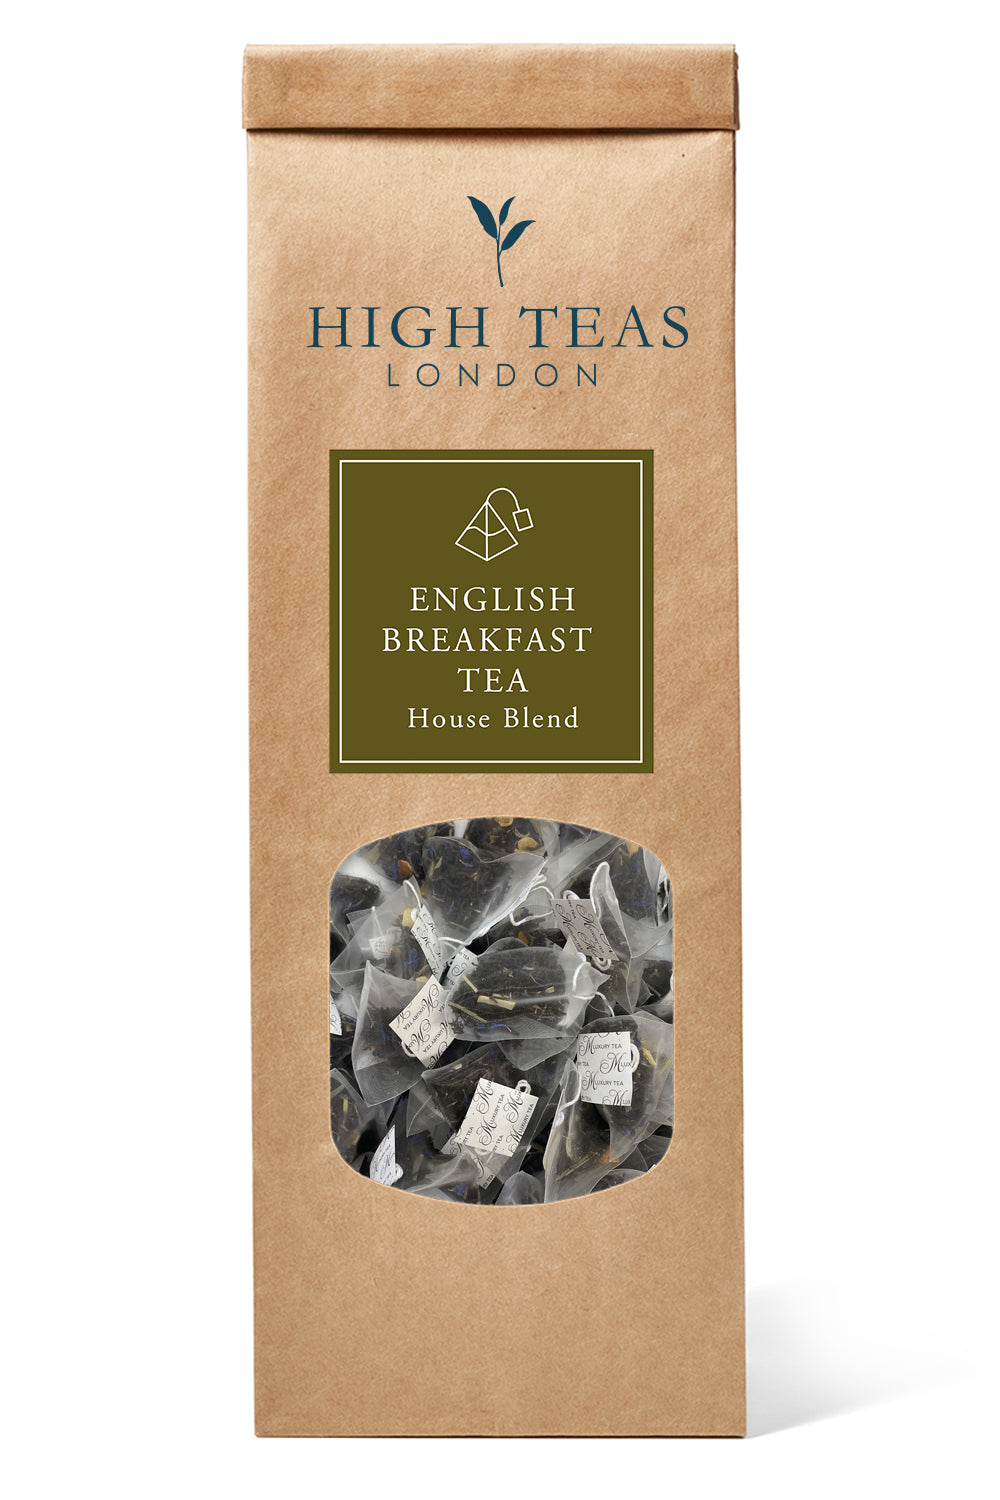 Our English Breakfast Tea - House Blend (pyramid bags)-20 pyramids-Loose Leaf Tea-High Teas